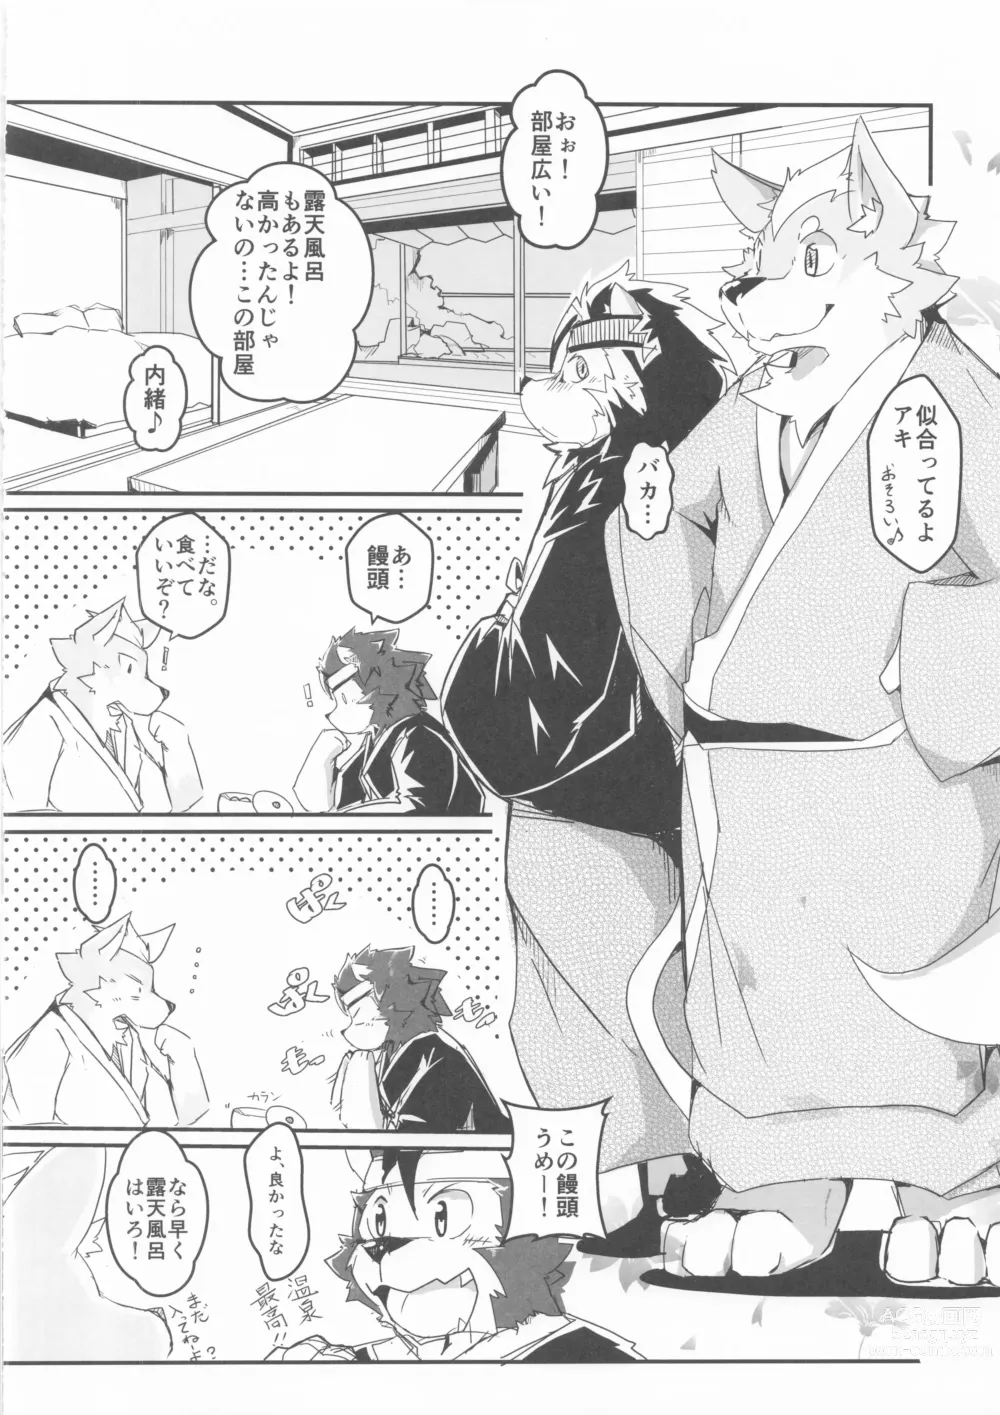 Page 67 of doujinshi Furo Hon!